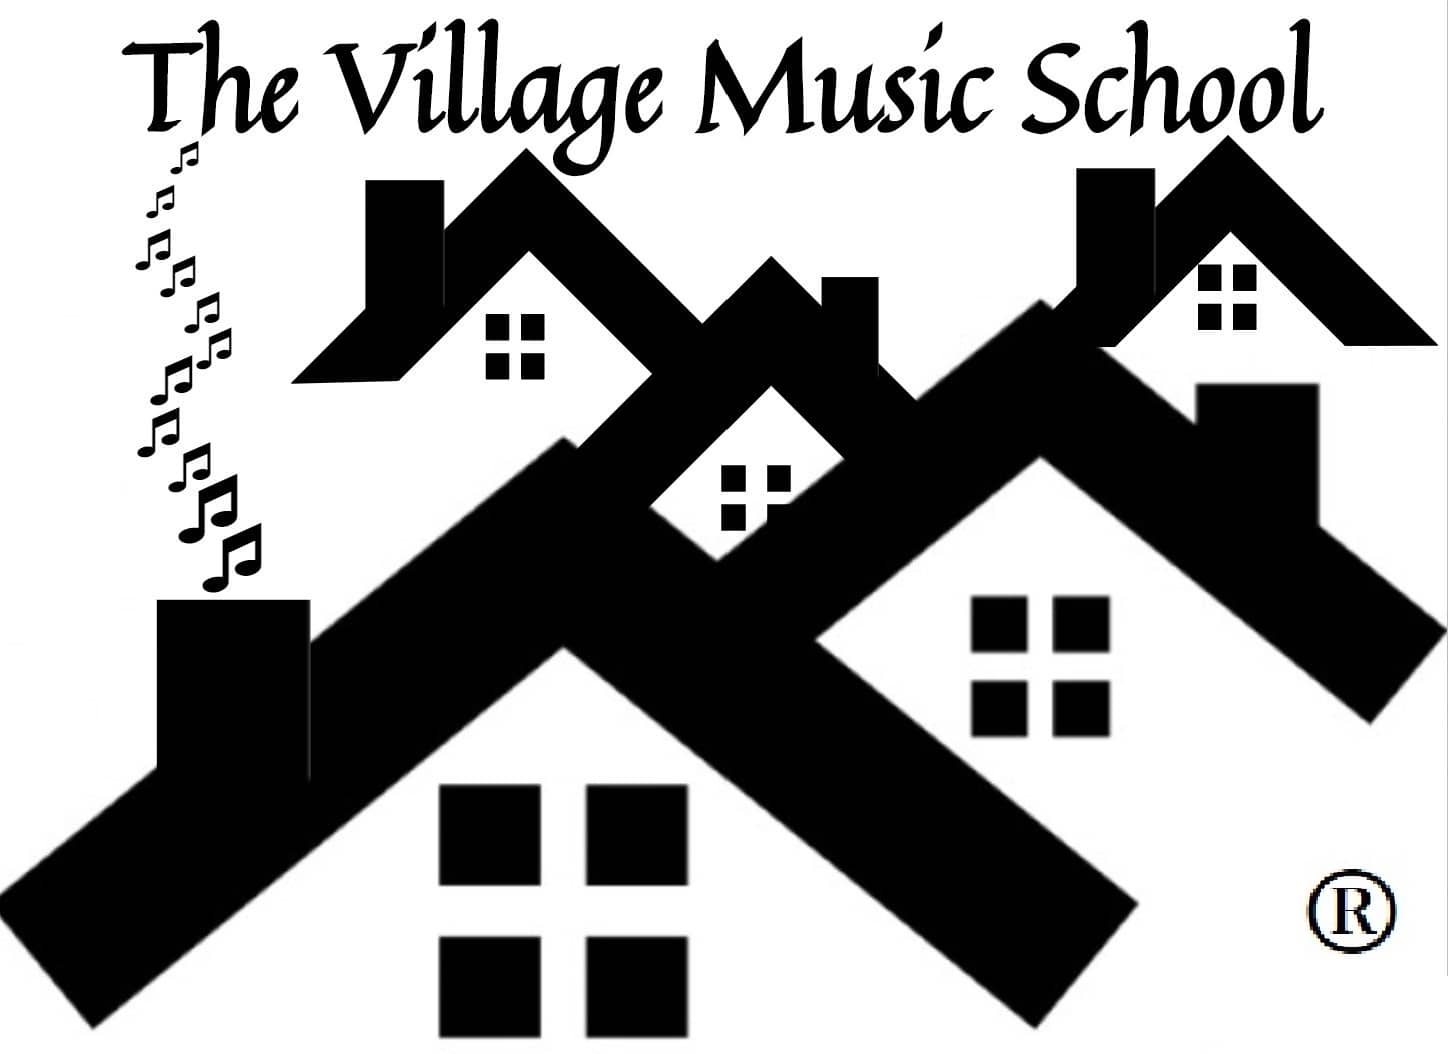 Registered Trademark of The Village Music School, Inc.